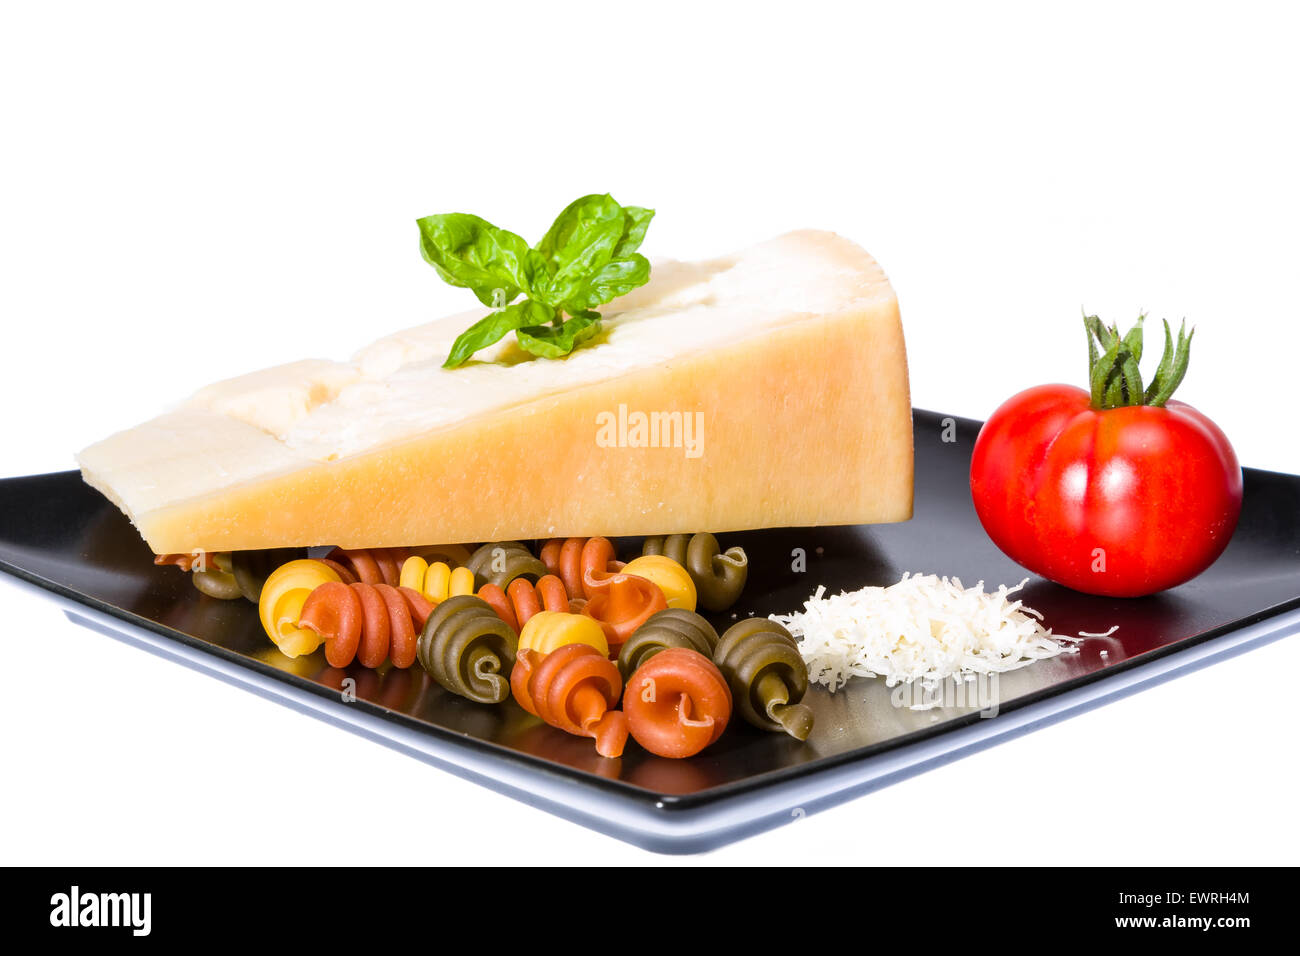 Cheese, pasta, tomato and basil - raw ingredient of Italian cuisine Stock Photo